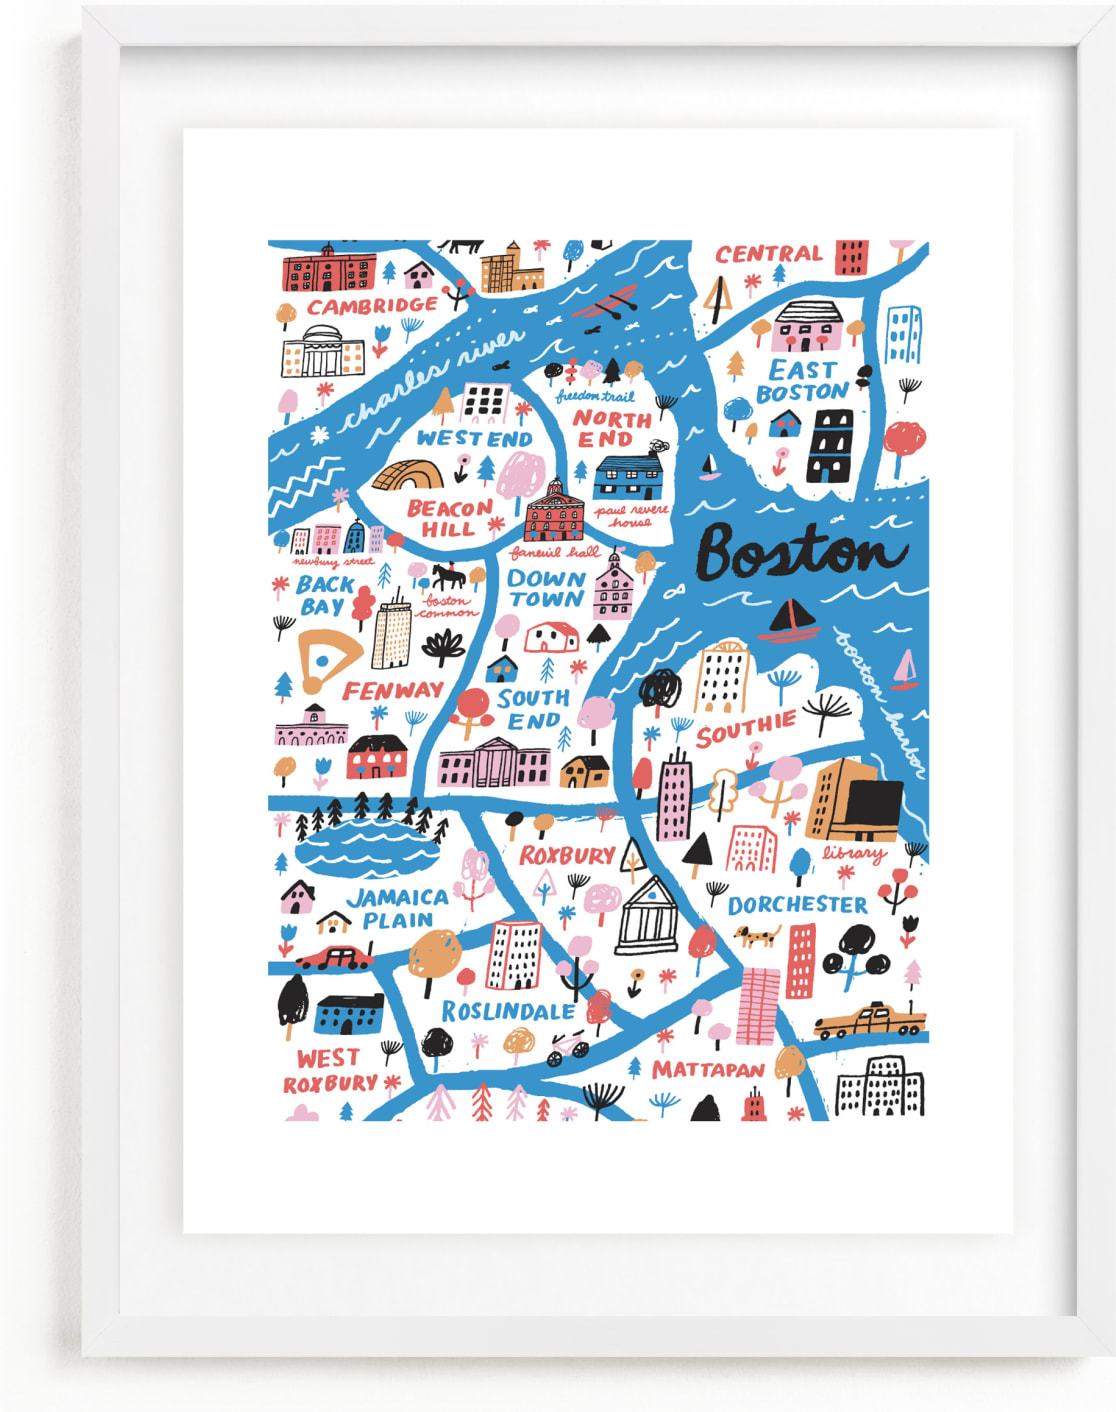 This is a blue art by Jordan Sondler called I Love Boston.